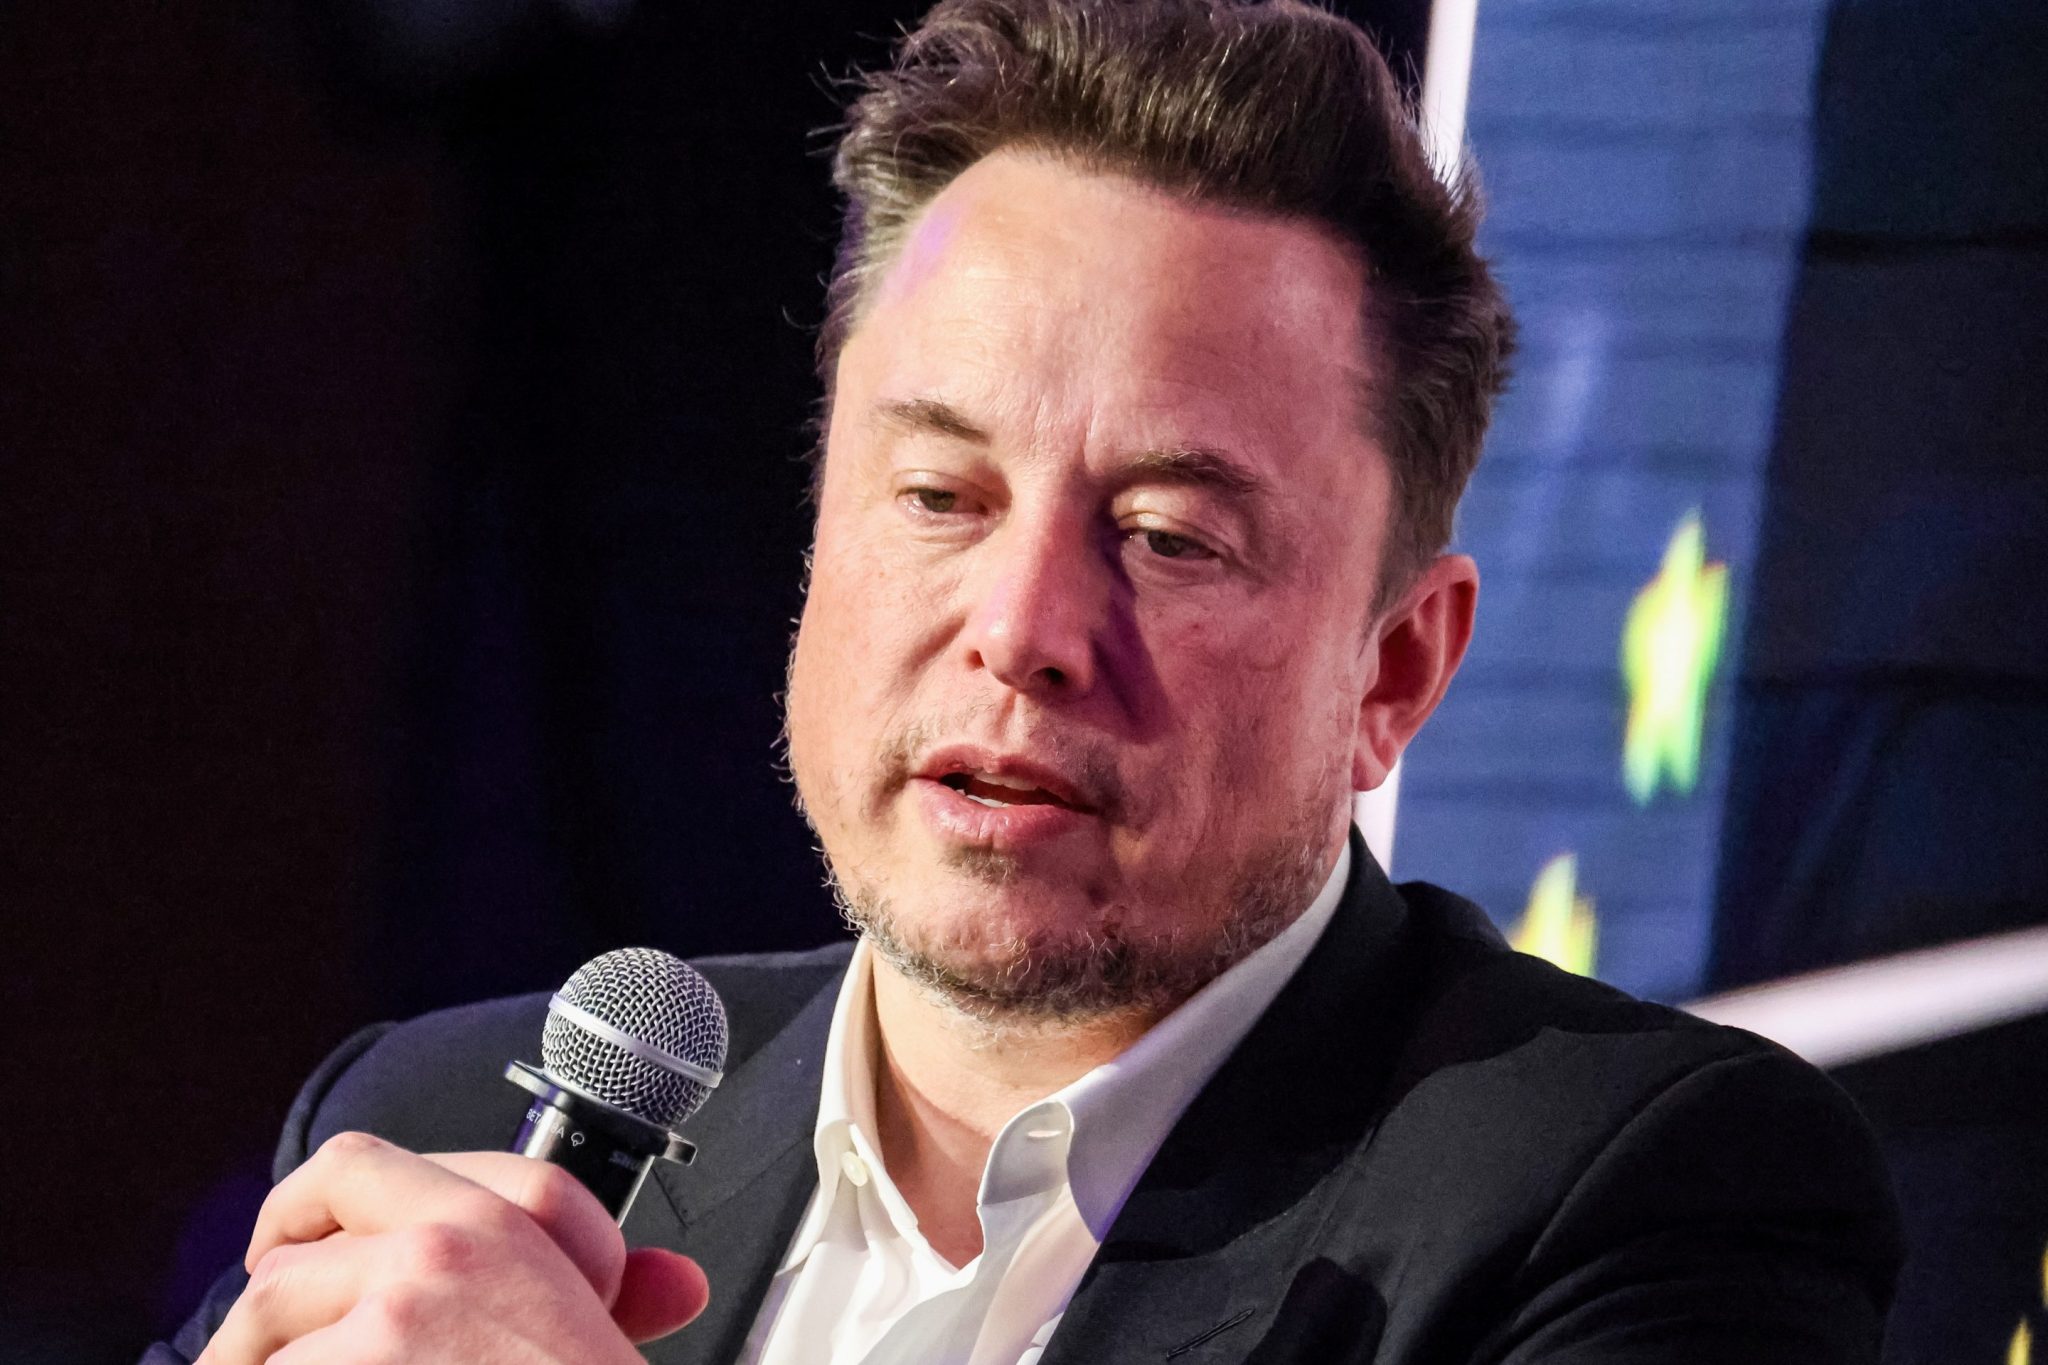 OpenAI wants Tesla staff, so Musk is poaching them first